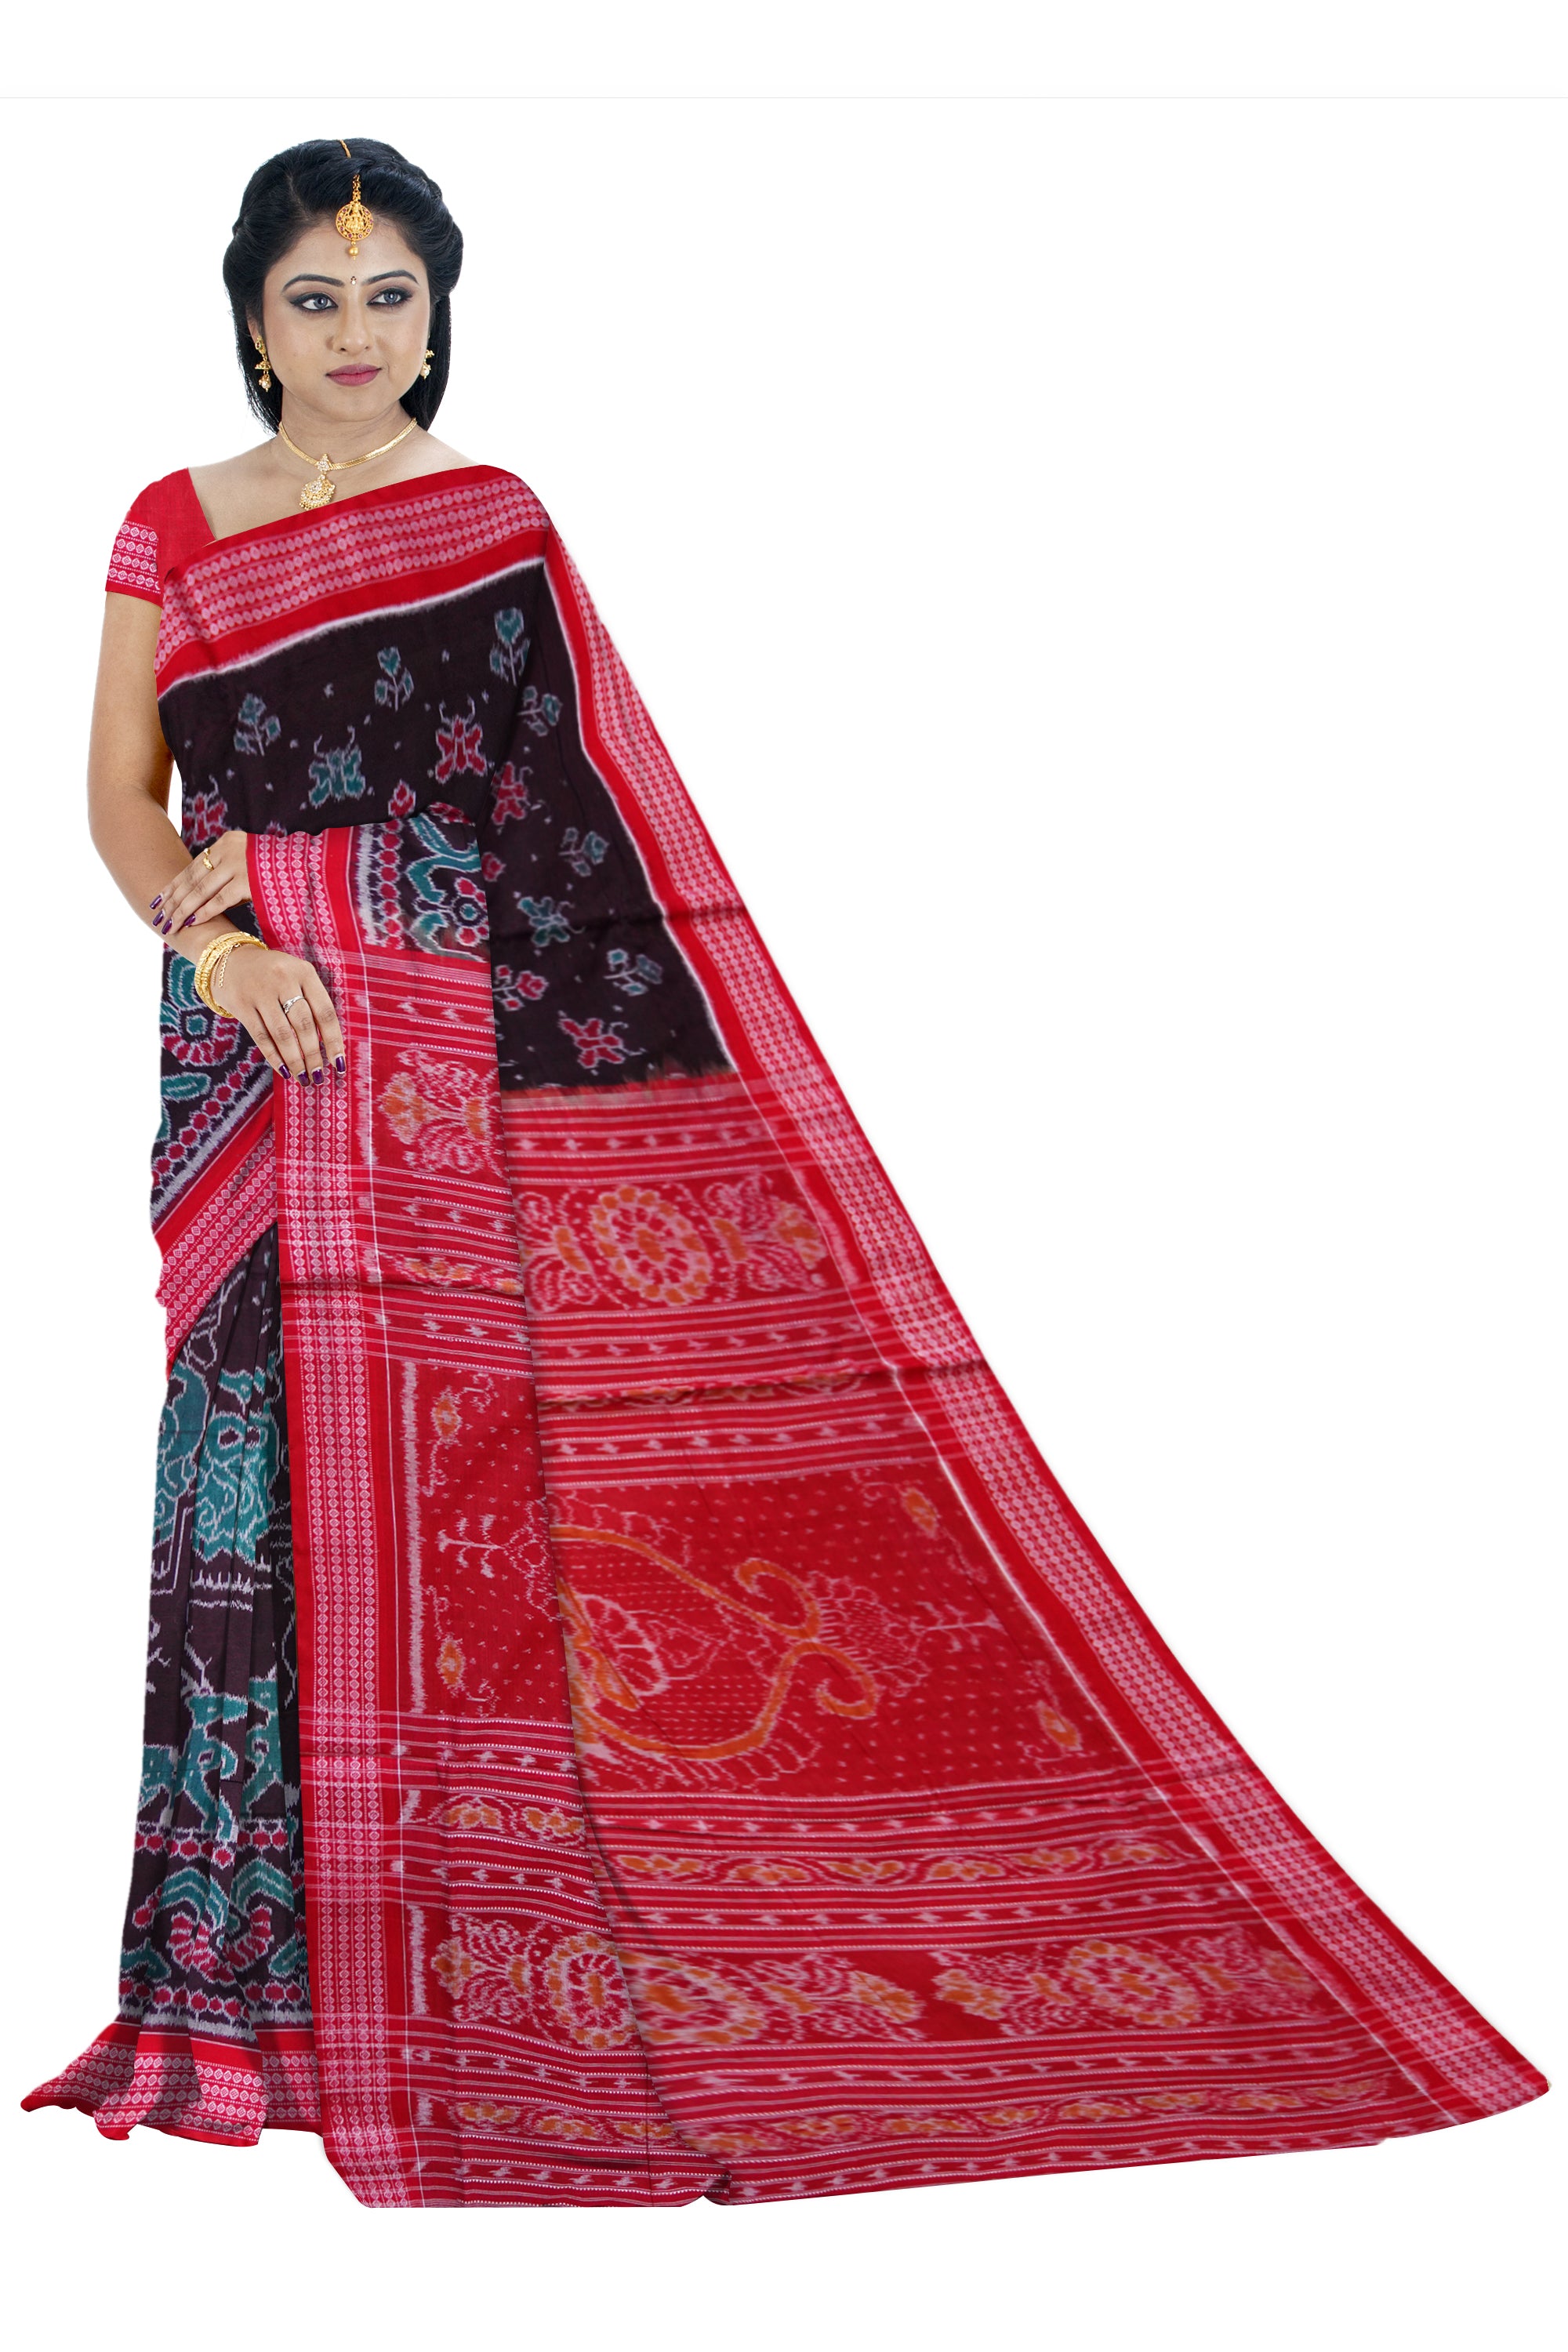 Peacock and Deer's bandha design on full body in  Black, Sea-green and Red colour Sambalpuri cotton saree. - Koshali Arts & Crafts Enterprise